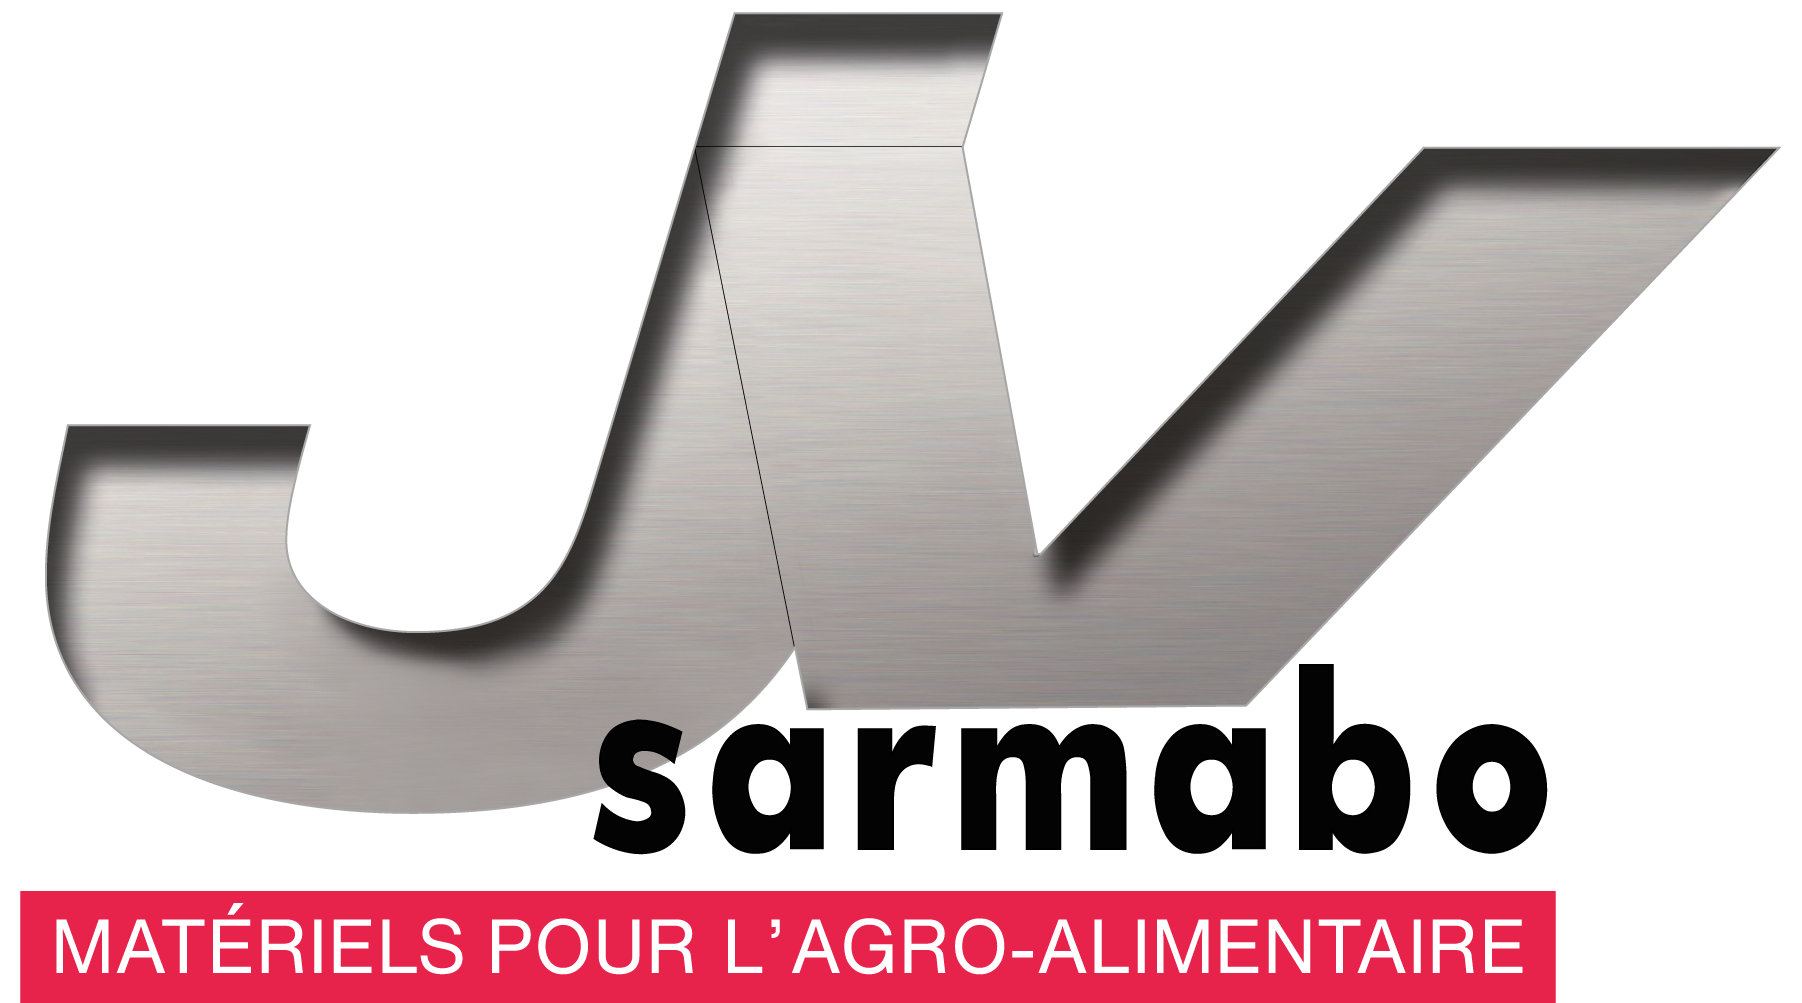 Logo JV La Française